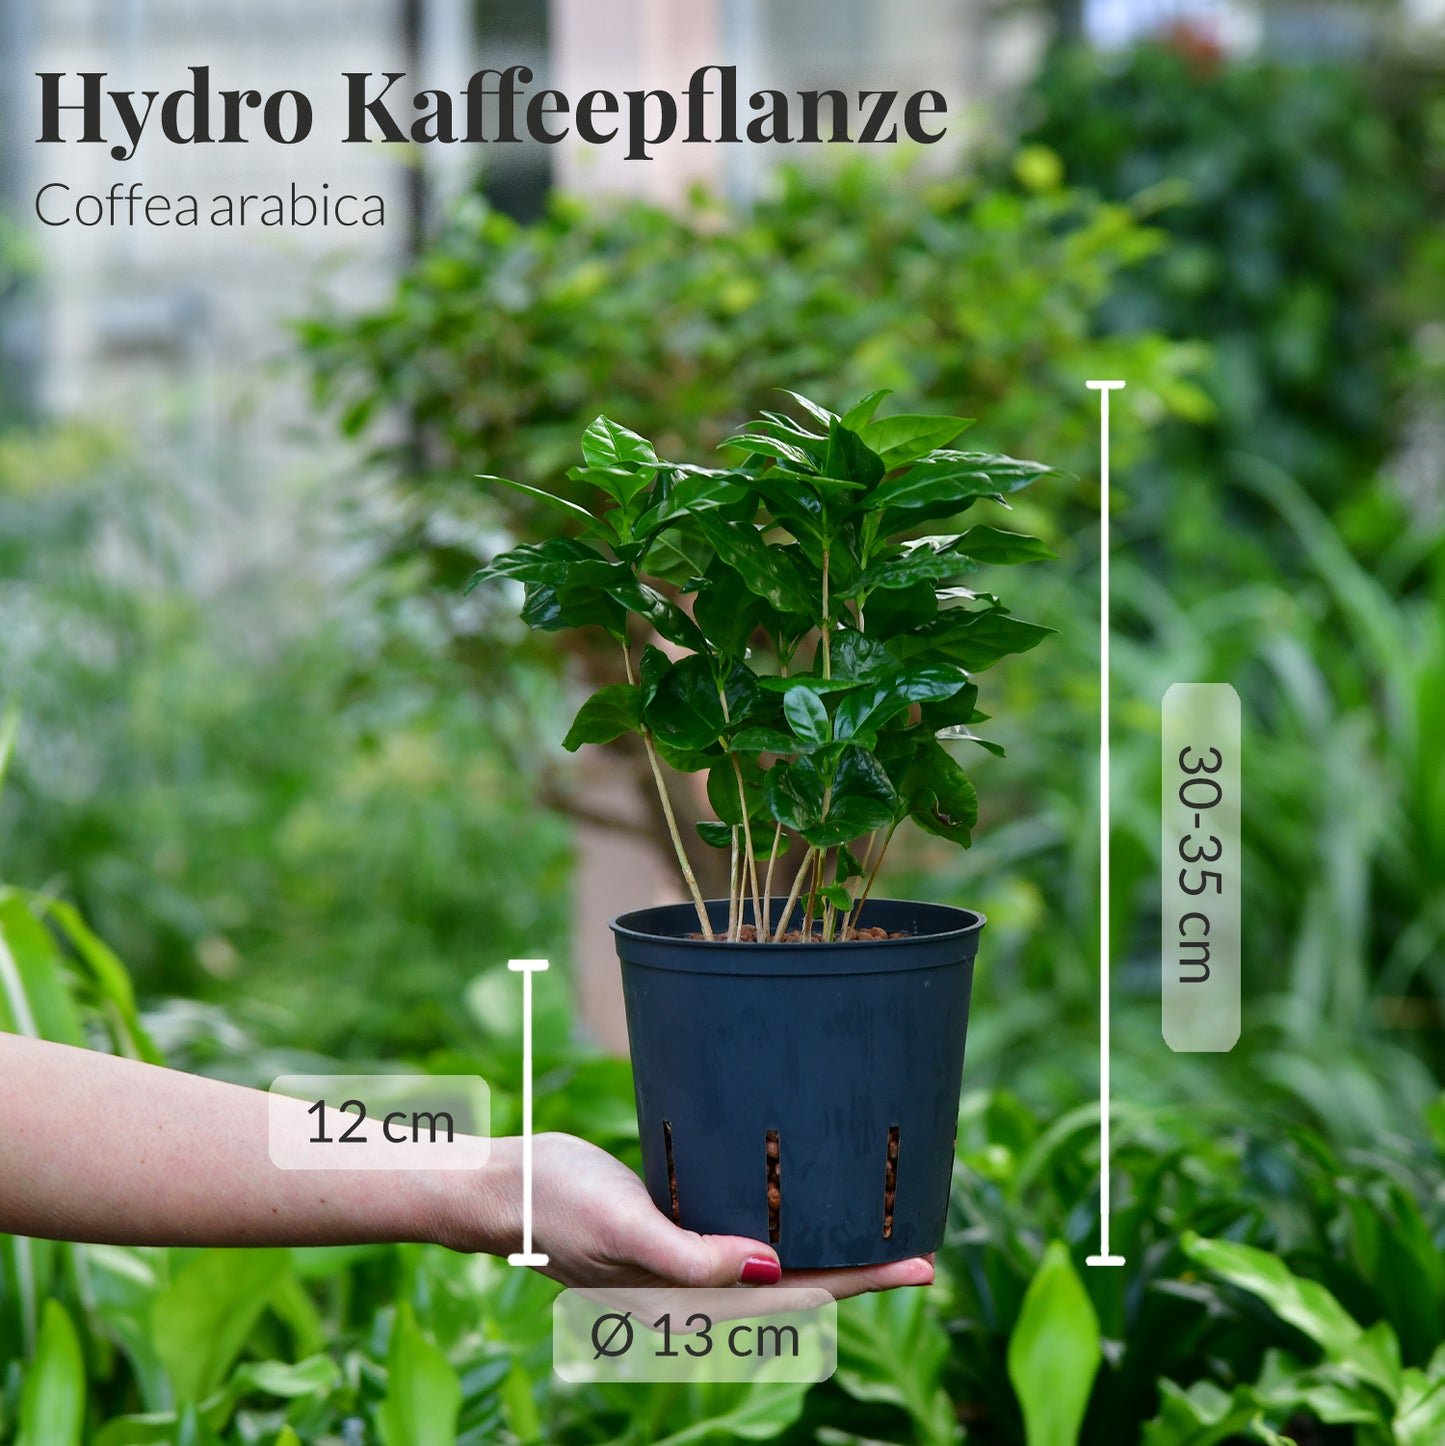 Hydro Kaffeepflanze